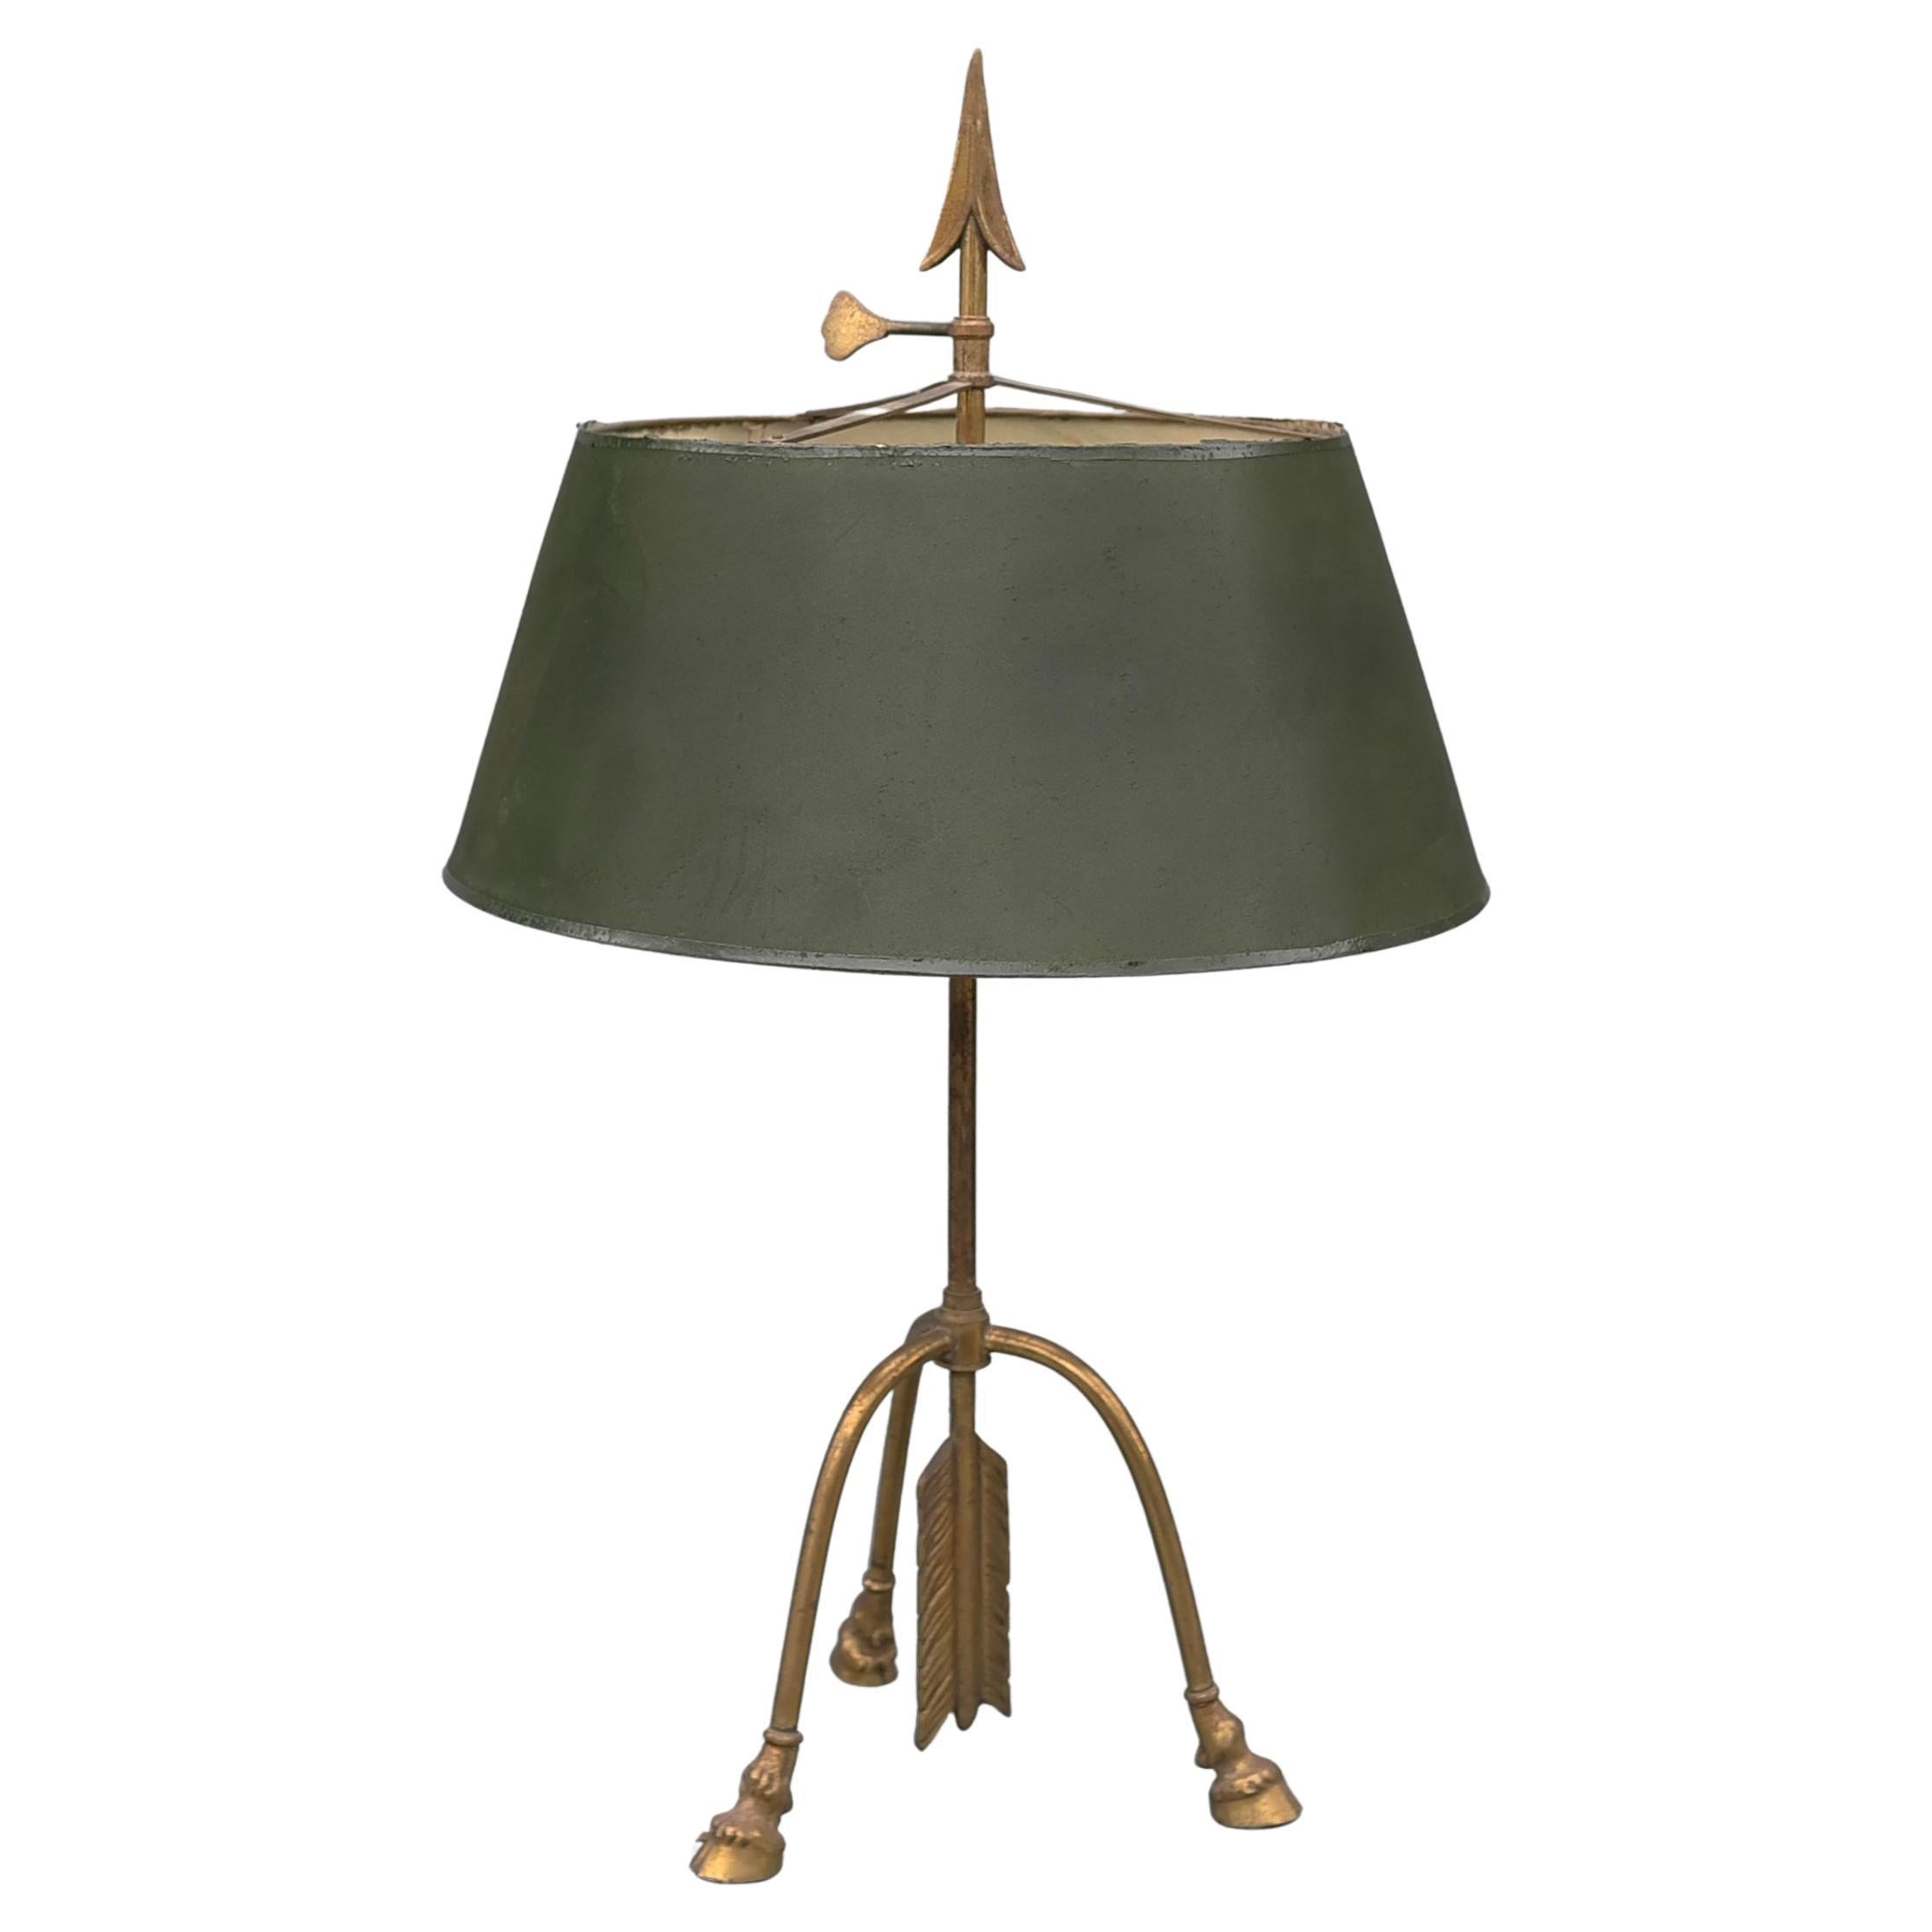 Maison Jansen 'Centaur' Hooves and Arrow Brass Table Lamp, France 1940's